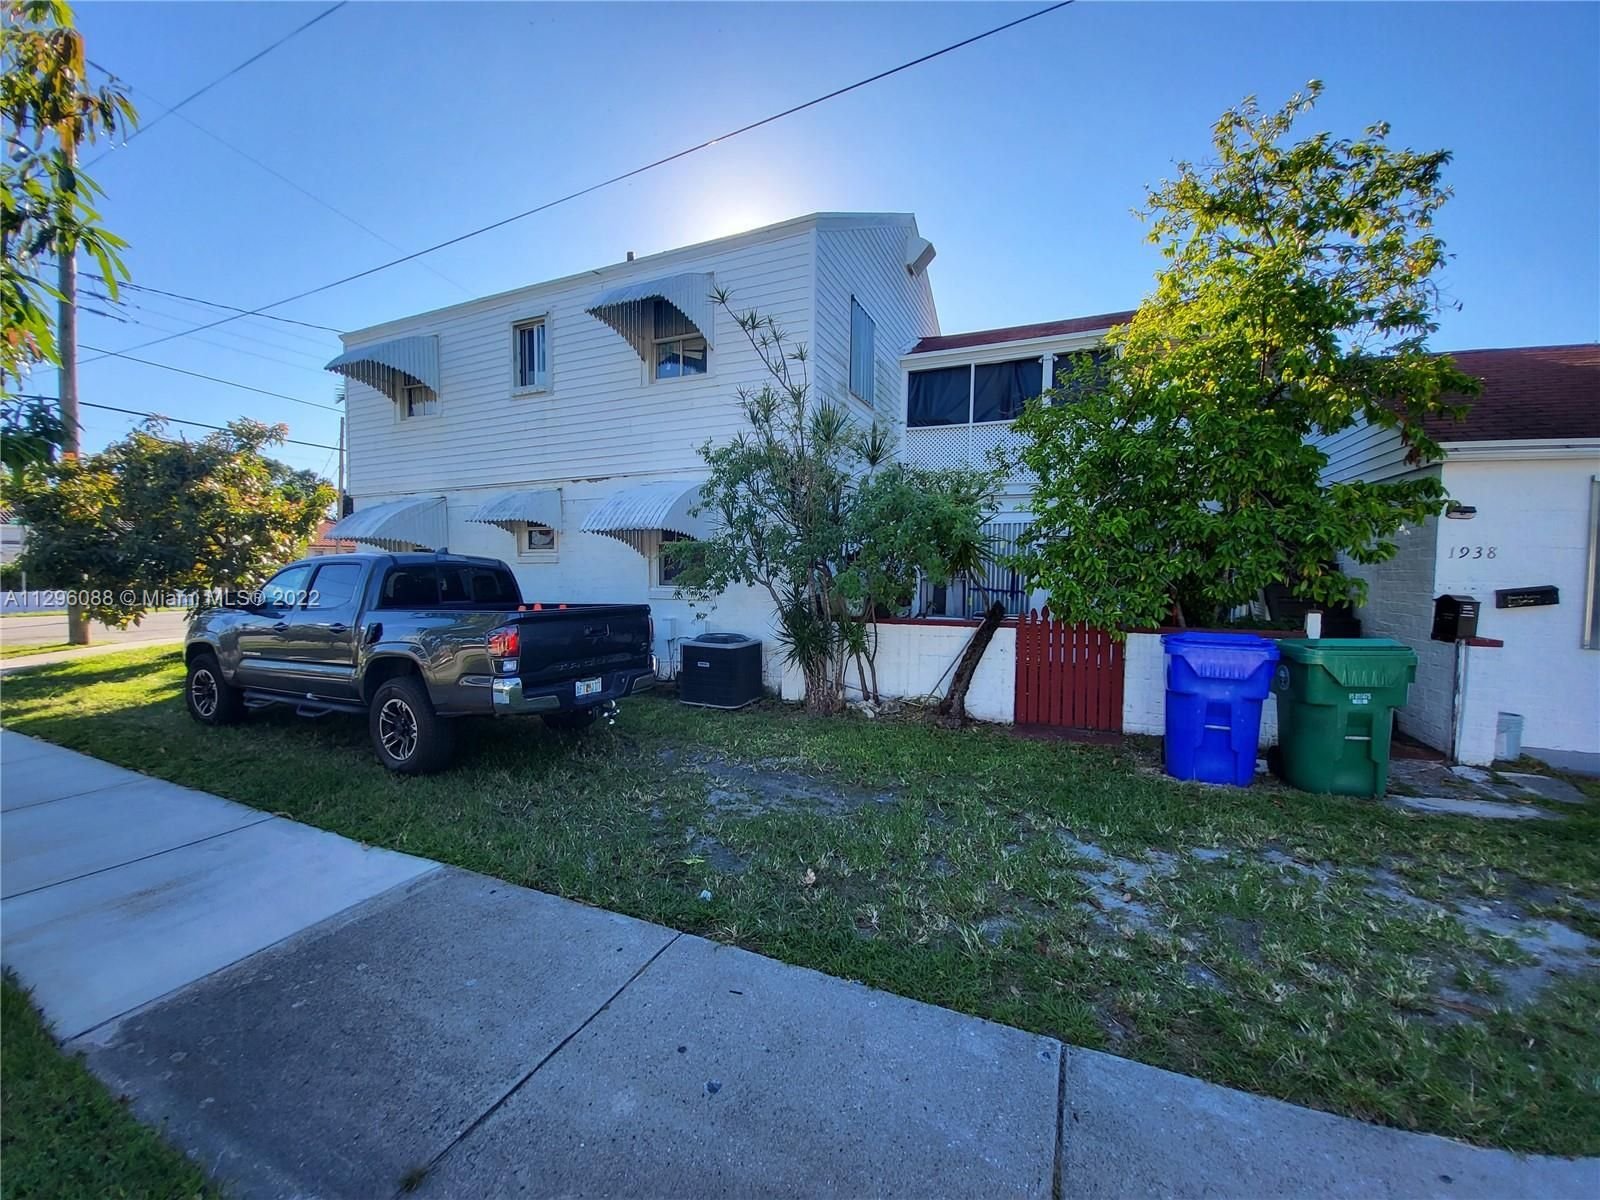 Real estate property located at 1938 16th Ave, Miami-Dade County, Miami, FL